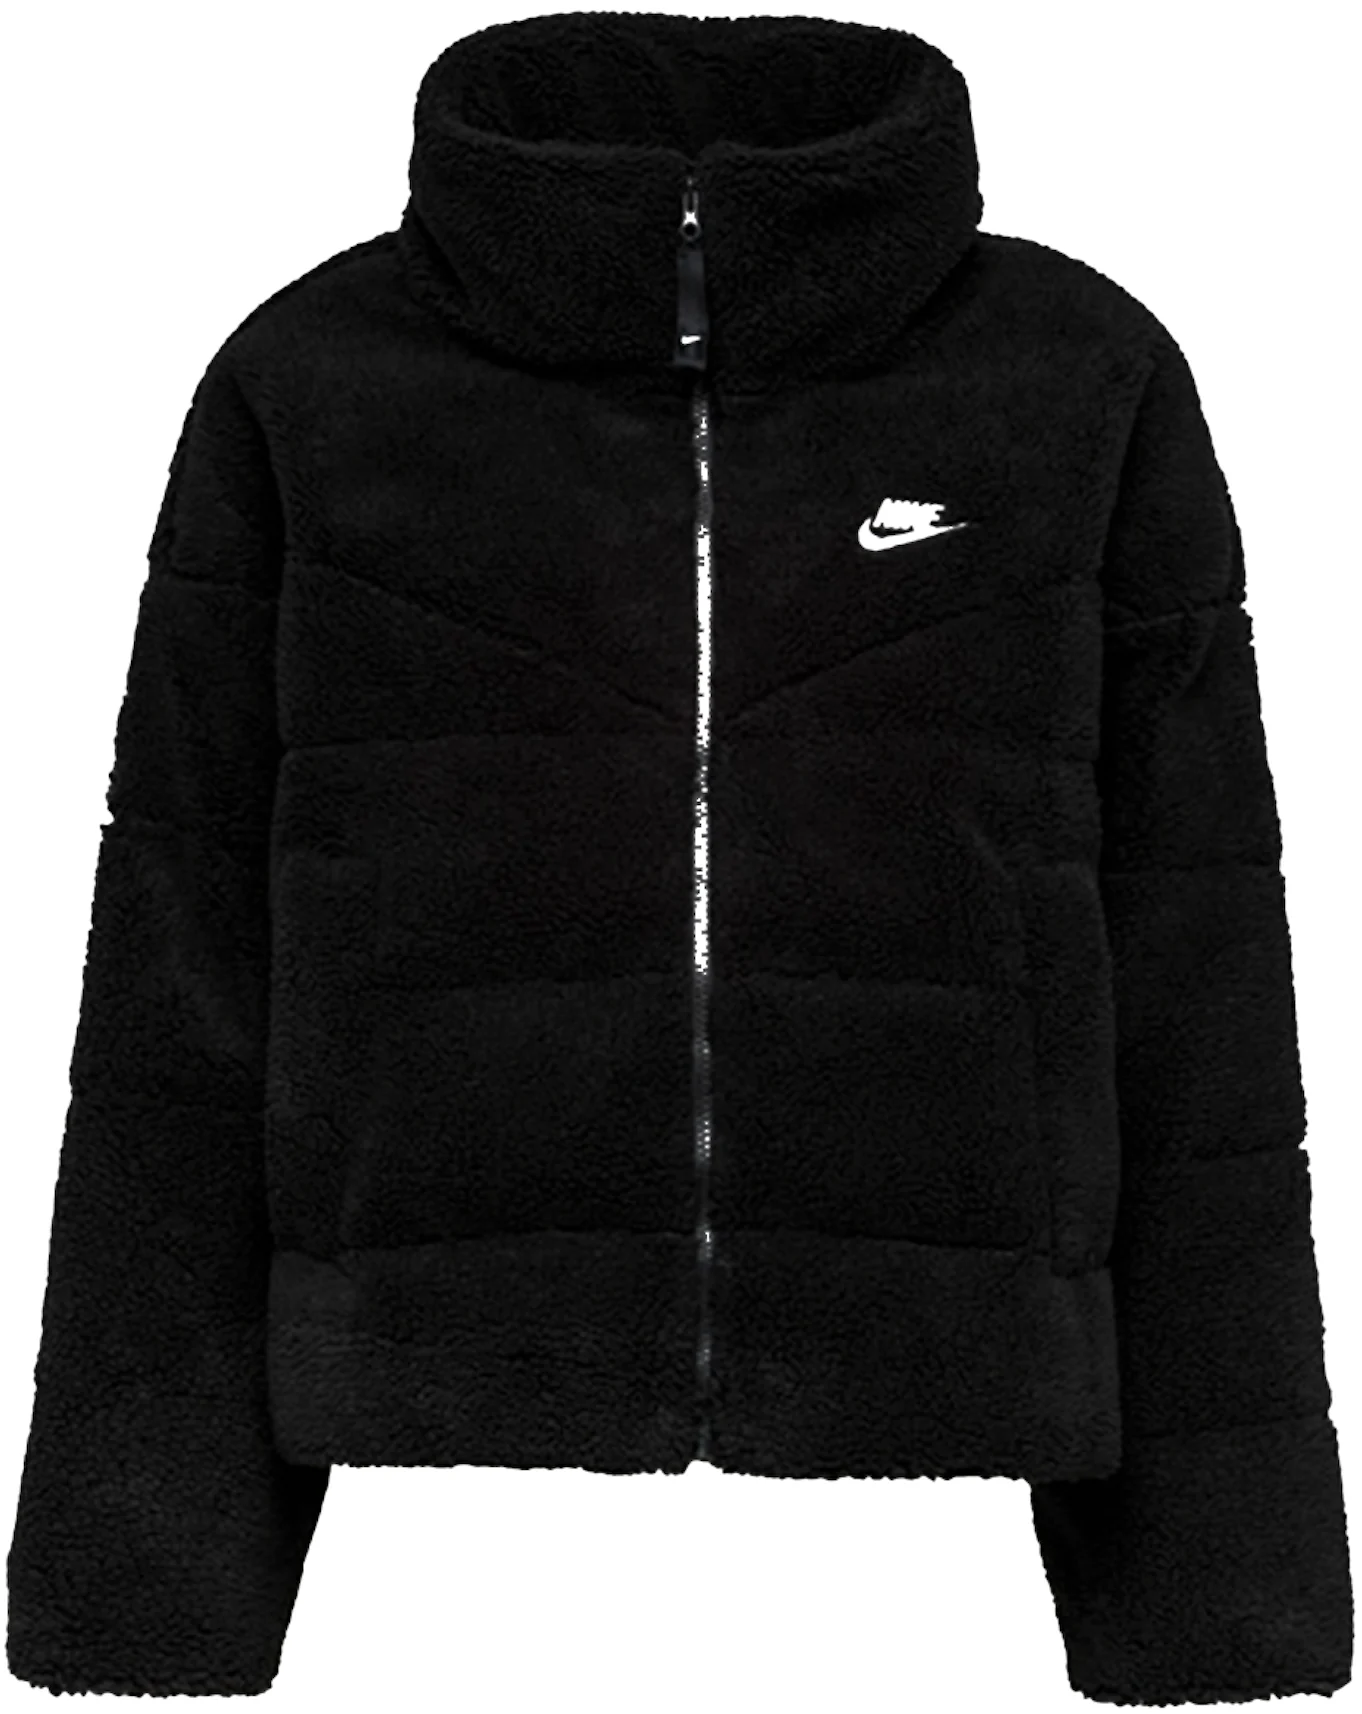 Nike Therma-Fit City Series down fill jacket black DH4079-010 NWT sz XL  $255.00 